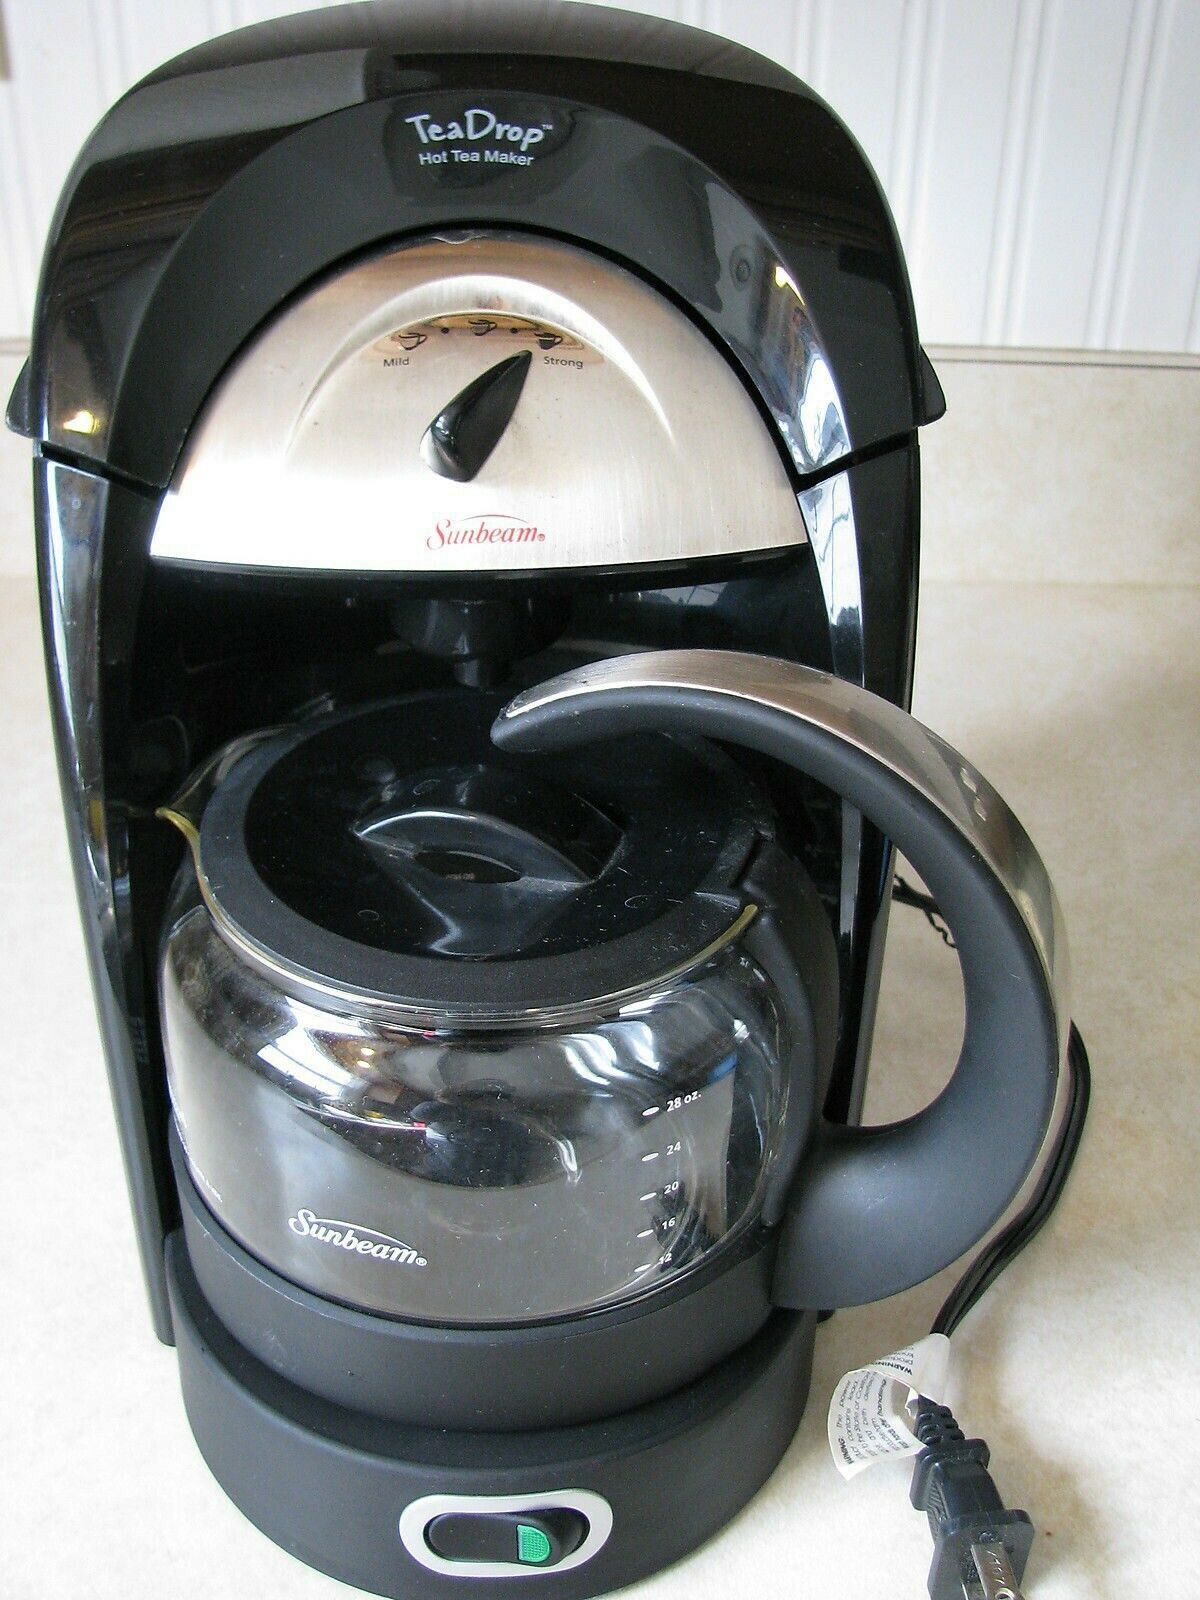 Sunbeam Tea Drop Electric Hot Tea Maker Pot and 50 similar items